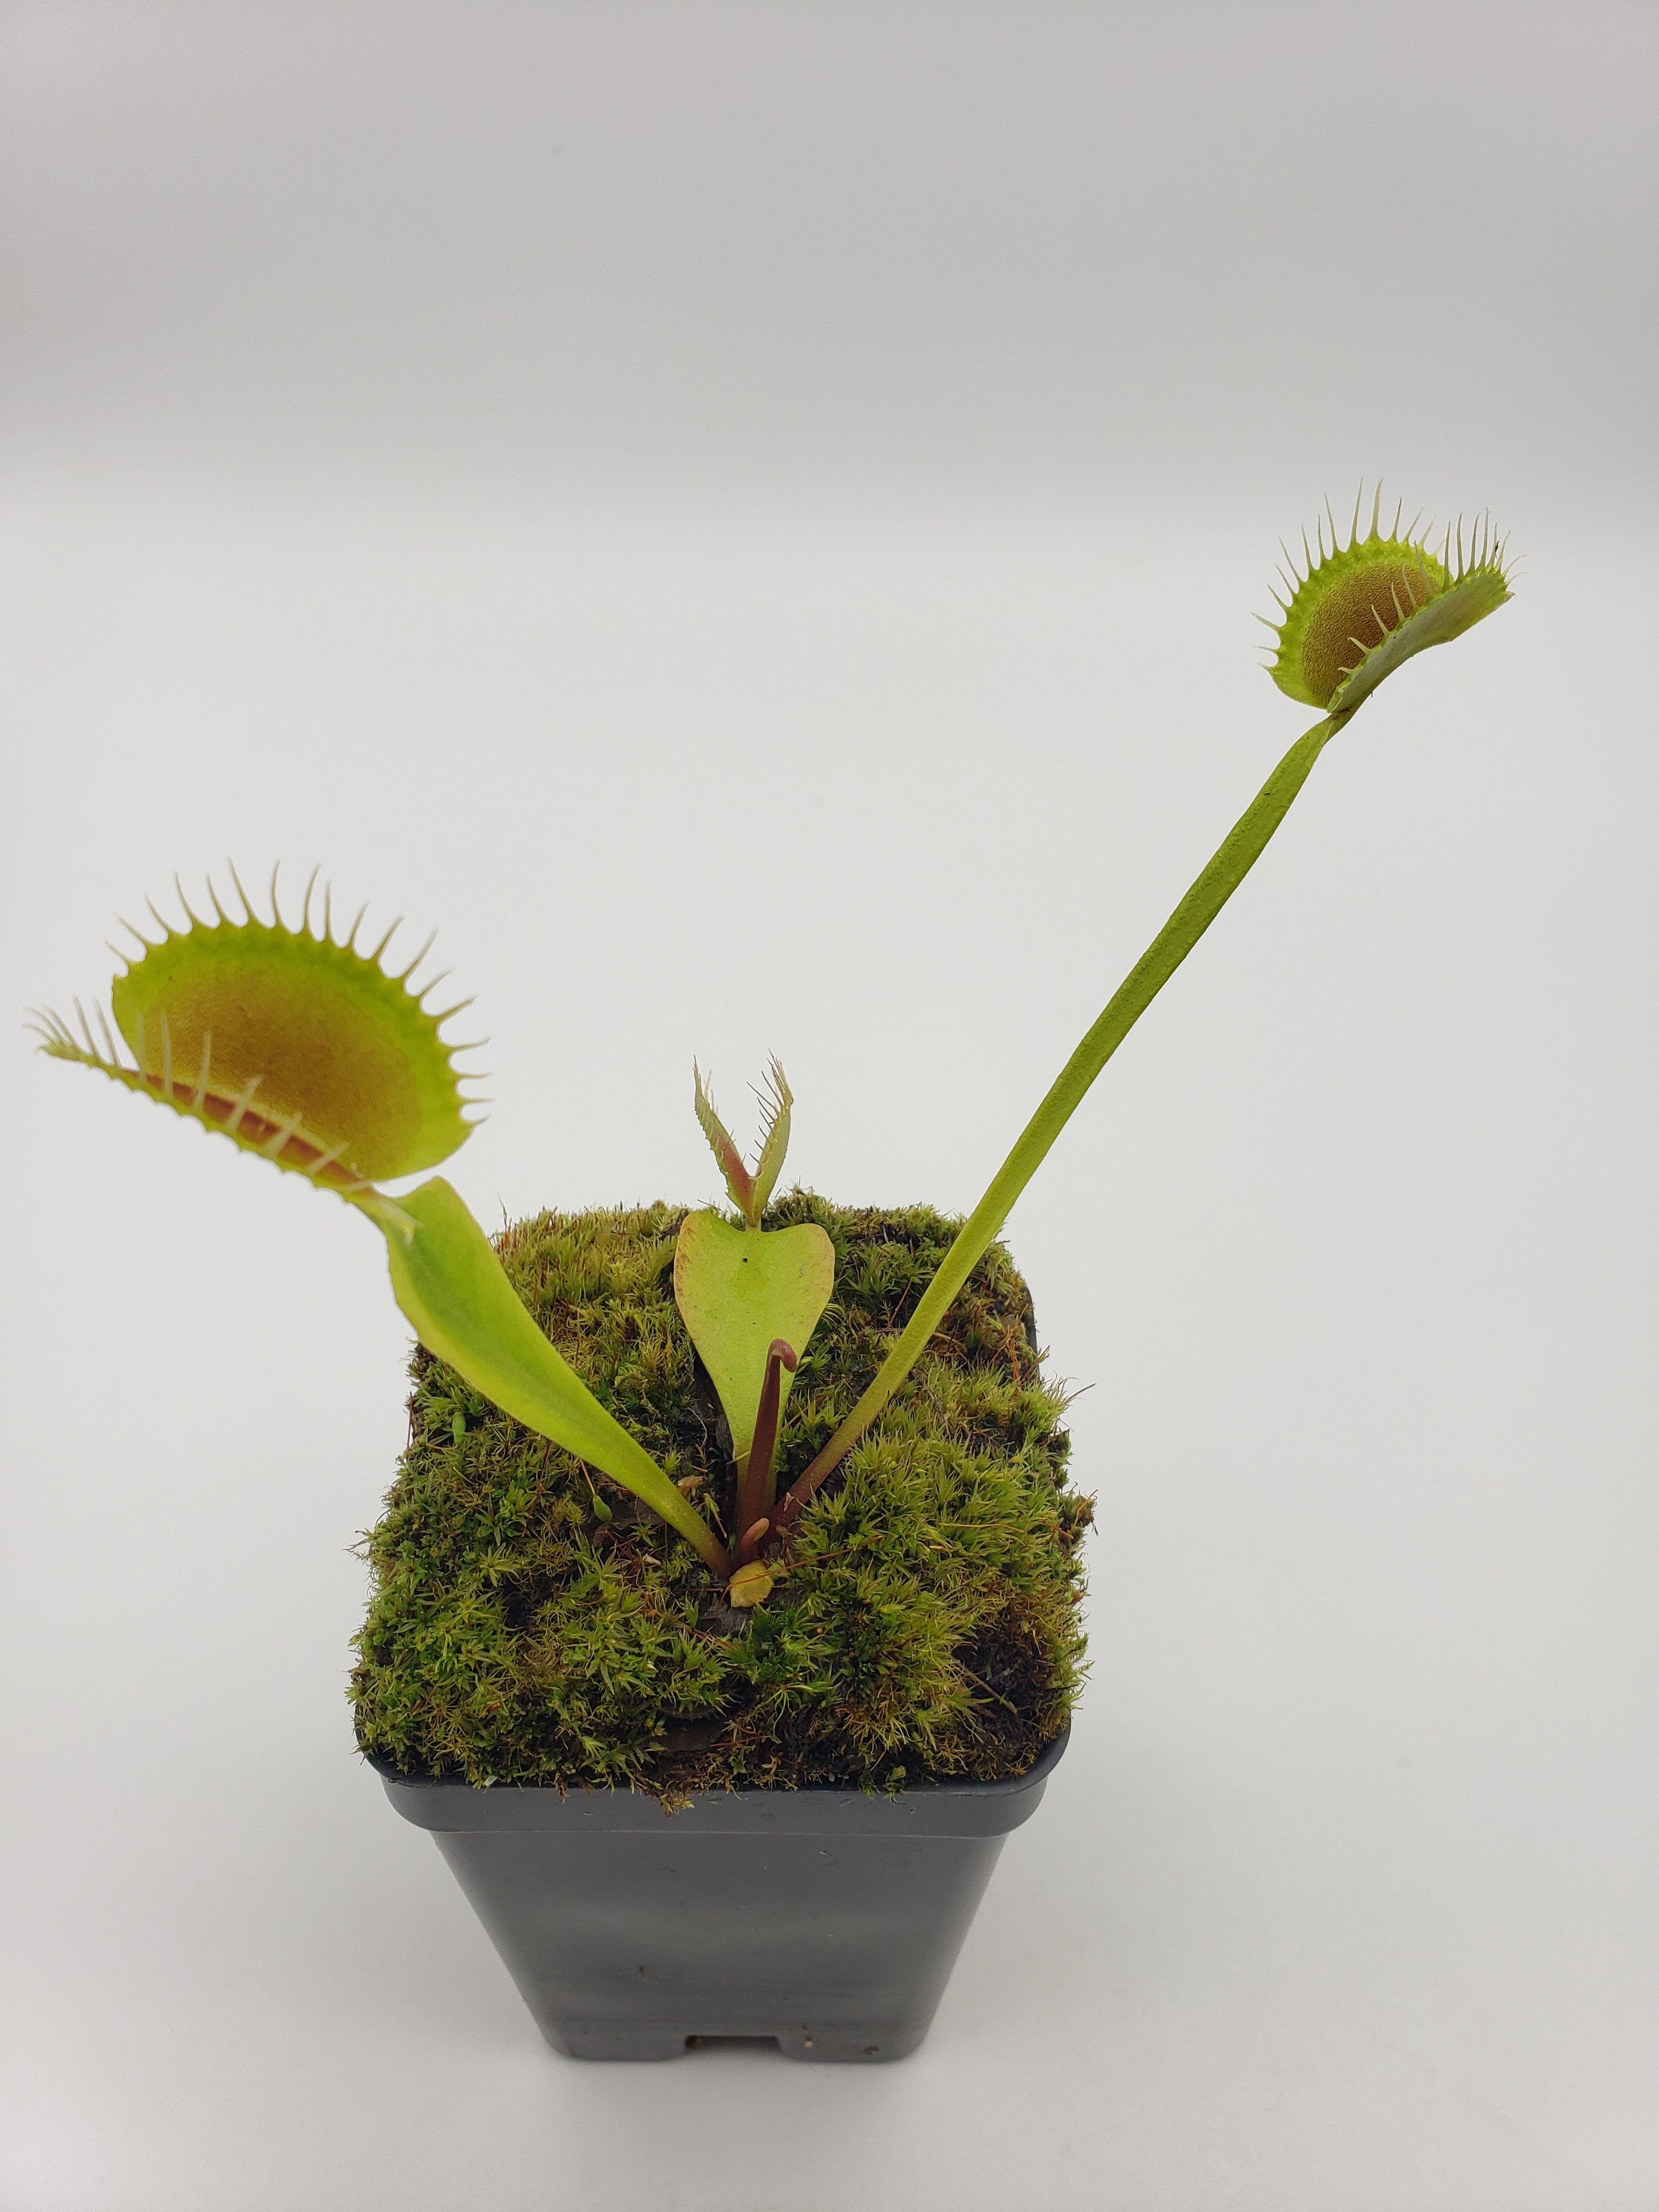 Venus flytrap (Dionaea muscipula) "Pinnacle" - Rainbow Carnivorous Plants LLC